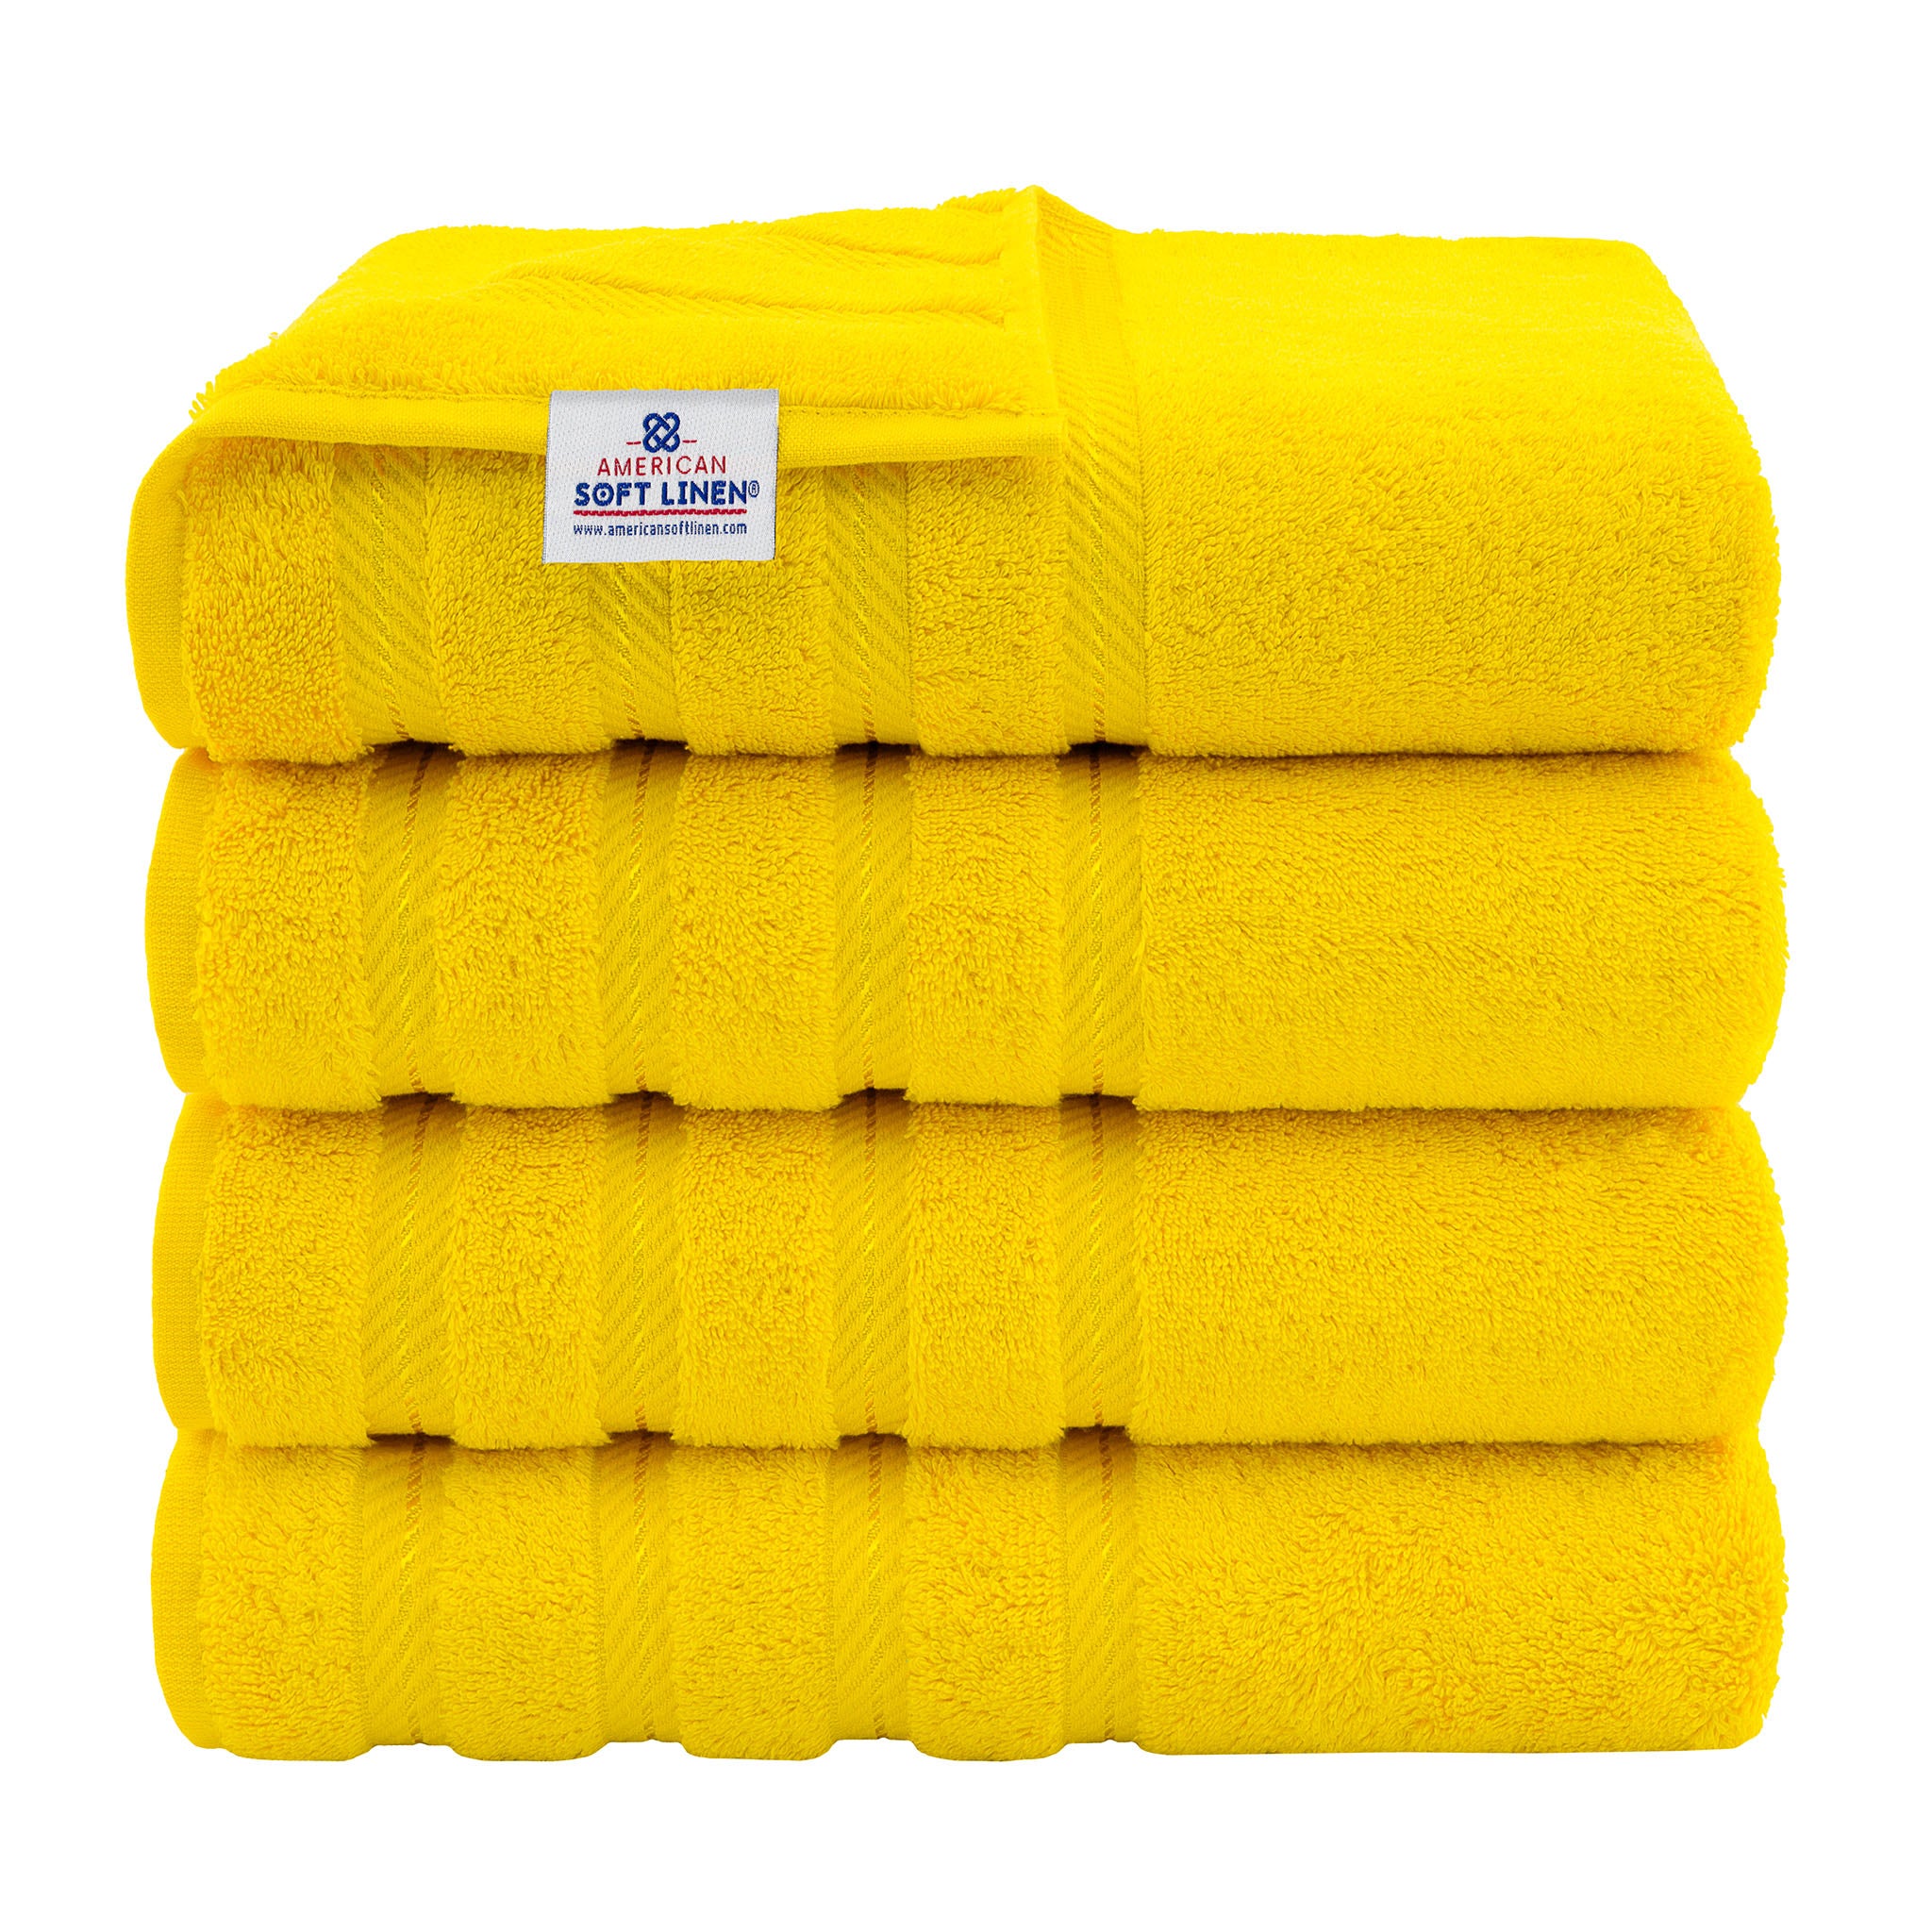 American Soft Linen 100% Turkish Cotton 4 Pack Bath Towel Set yellow-1